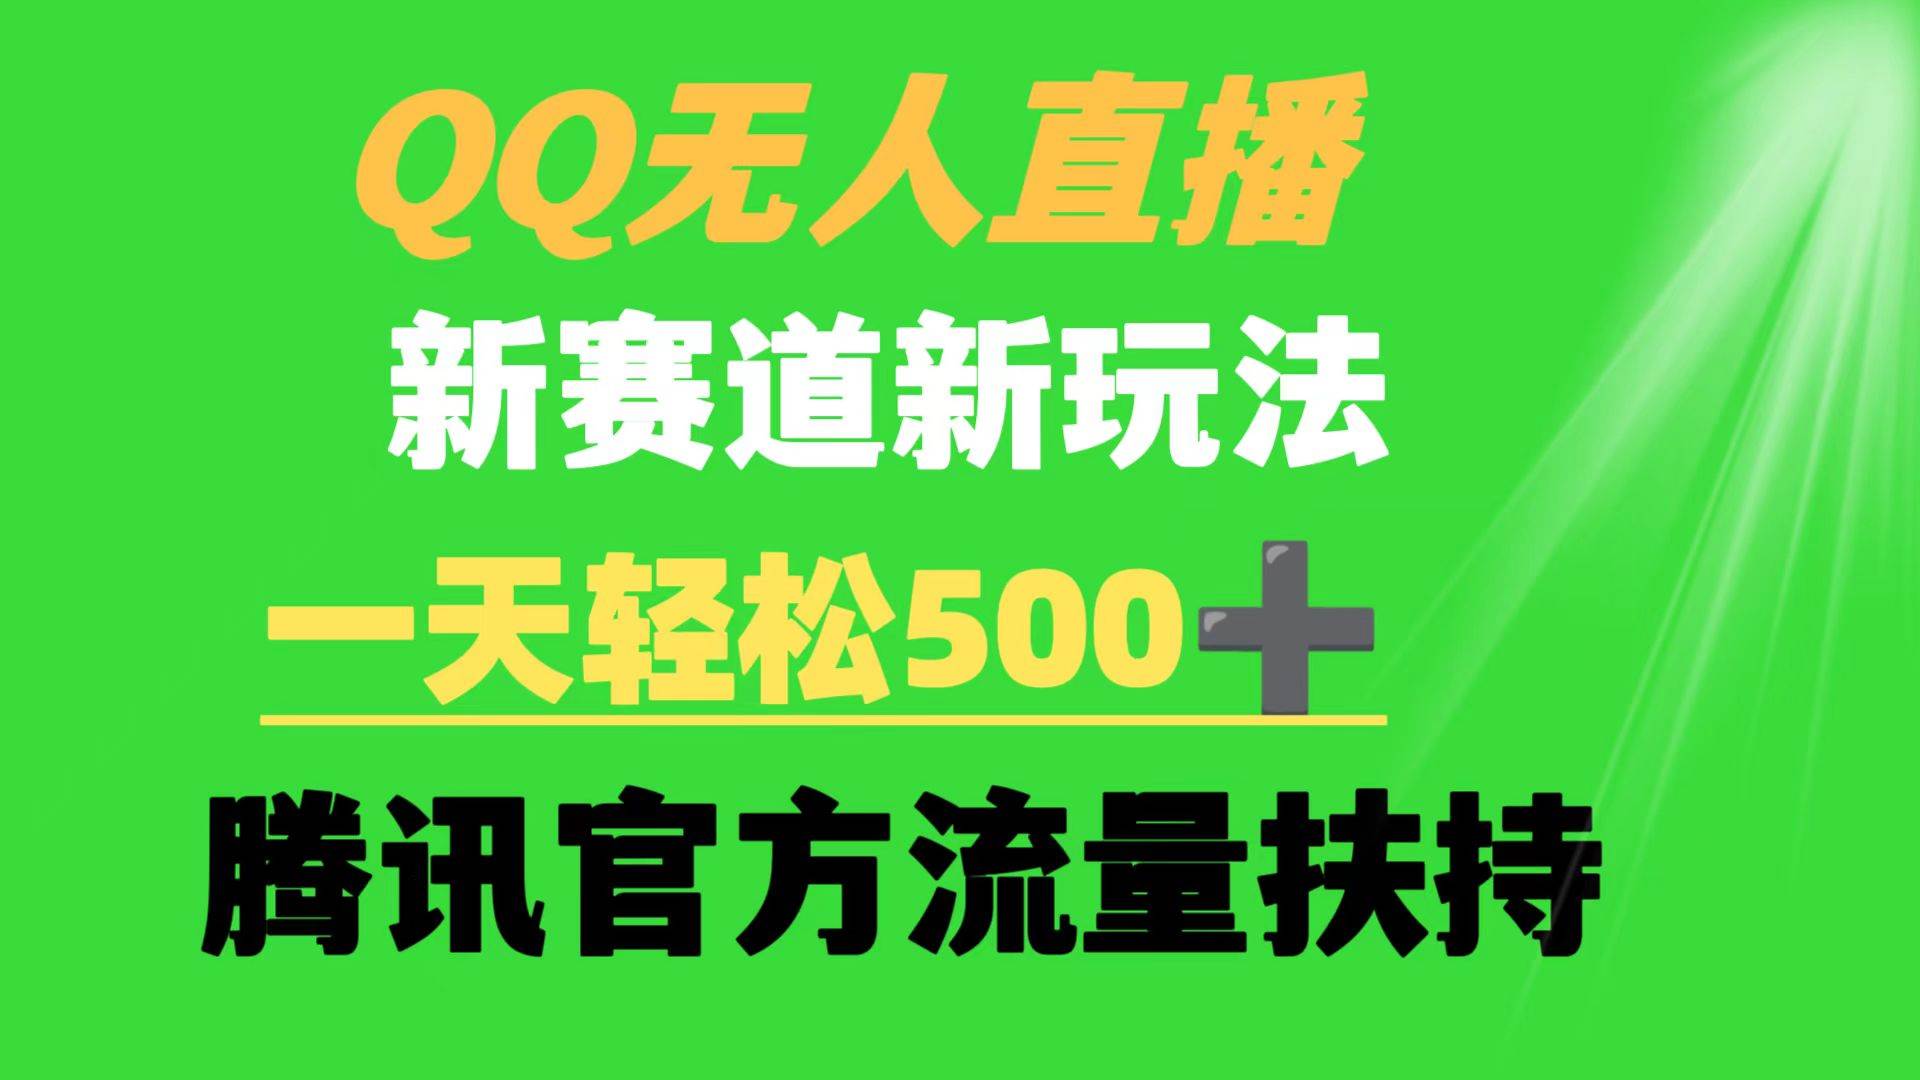 QQ无人直播 新赛道新玩法 一天轻松500+ 腾讯官方流量扶持-上品源码网